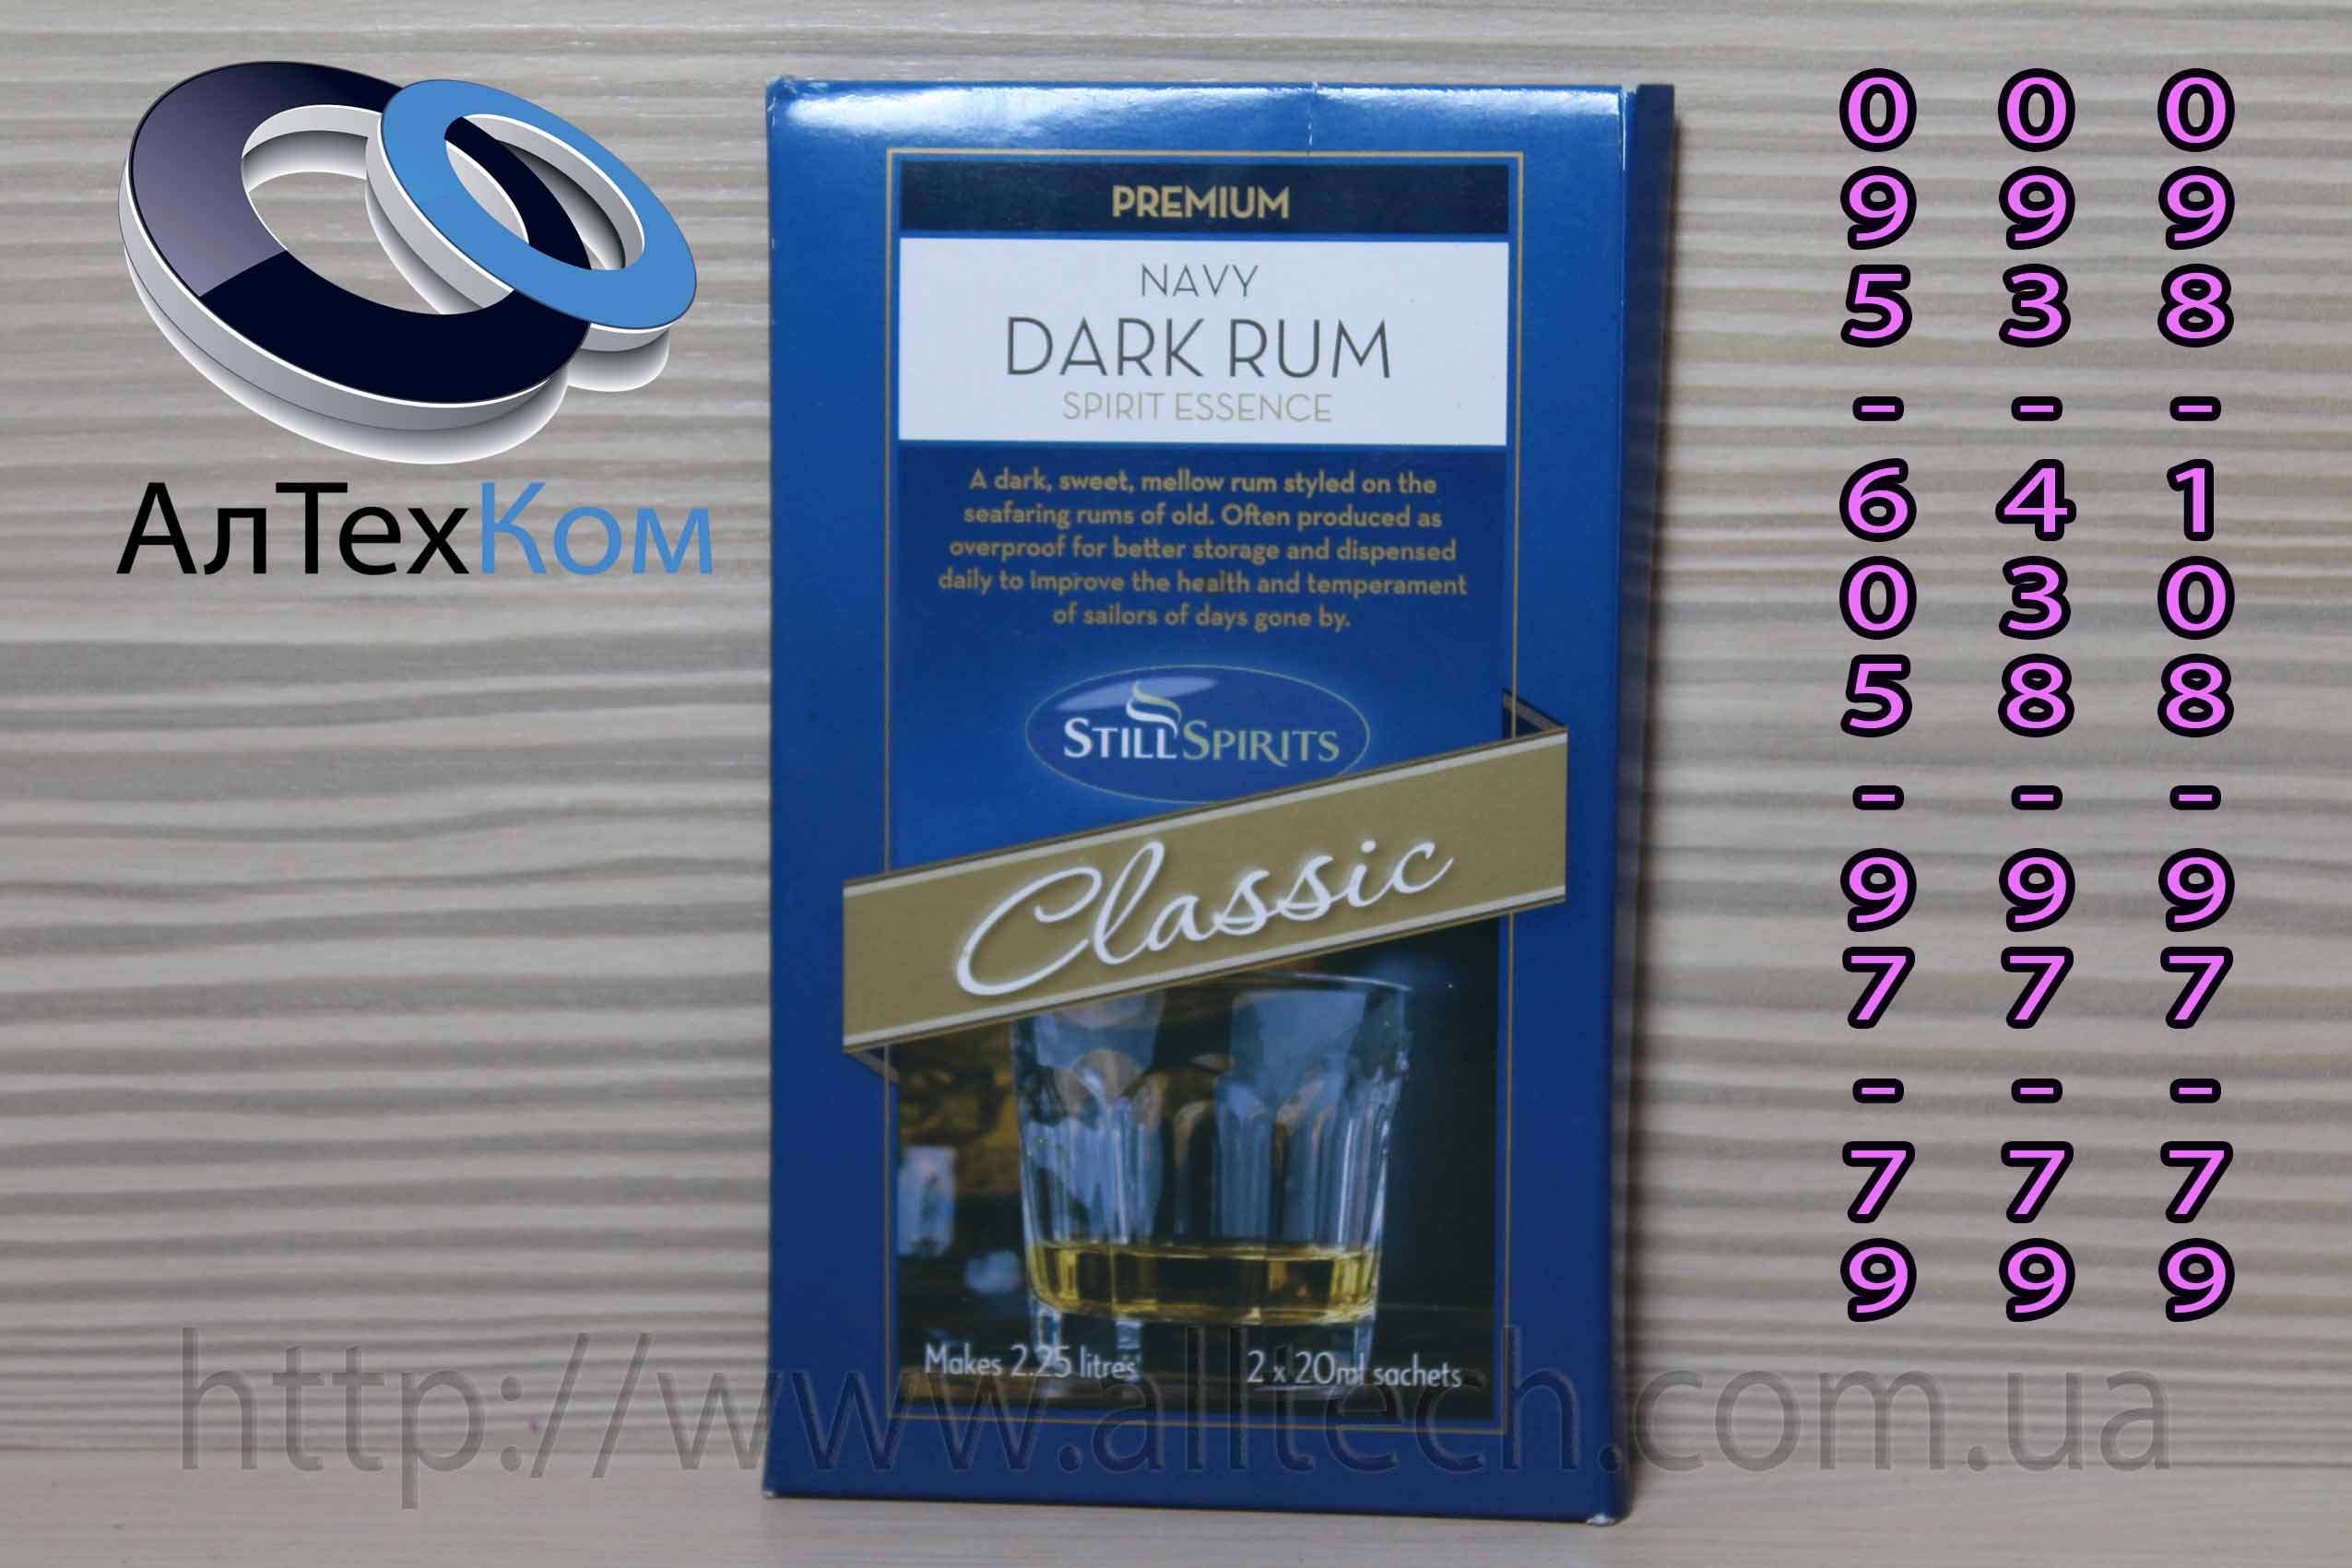   Still Spirits Classic Navy Dark Rum